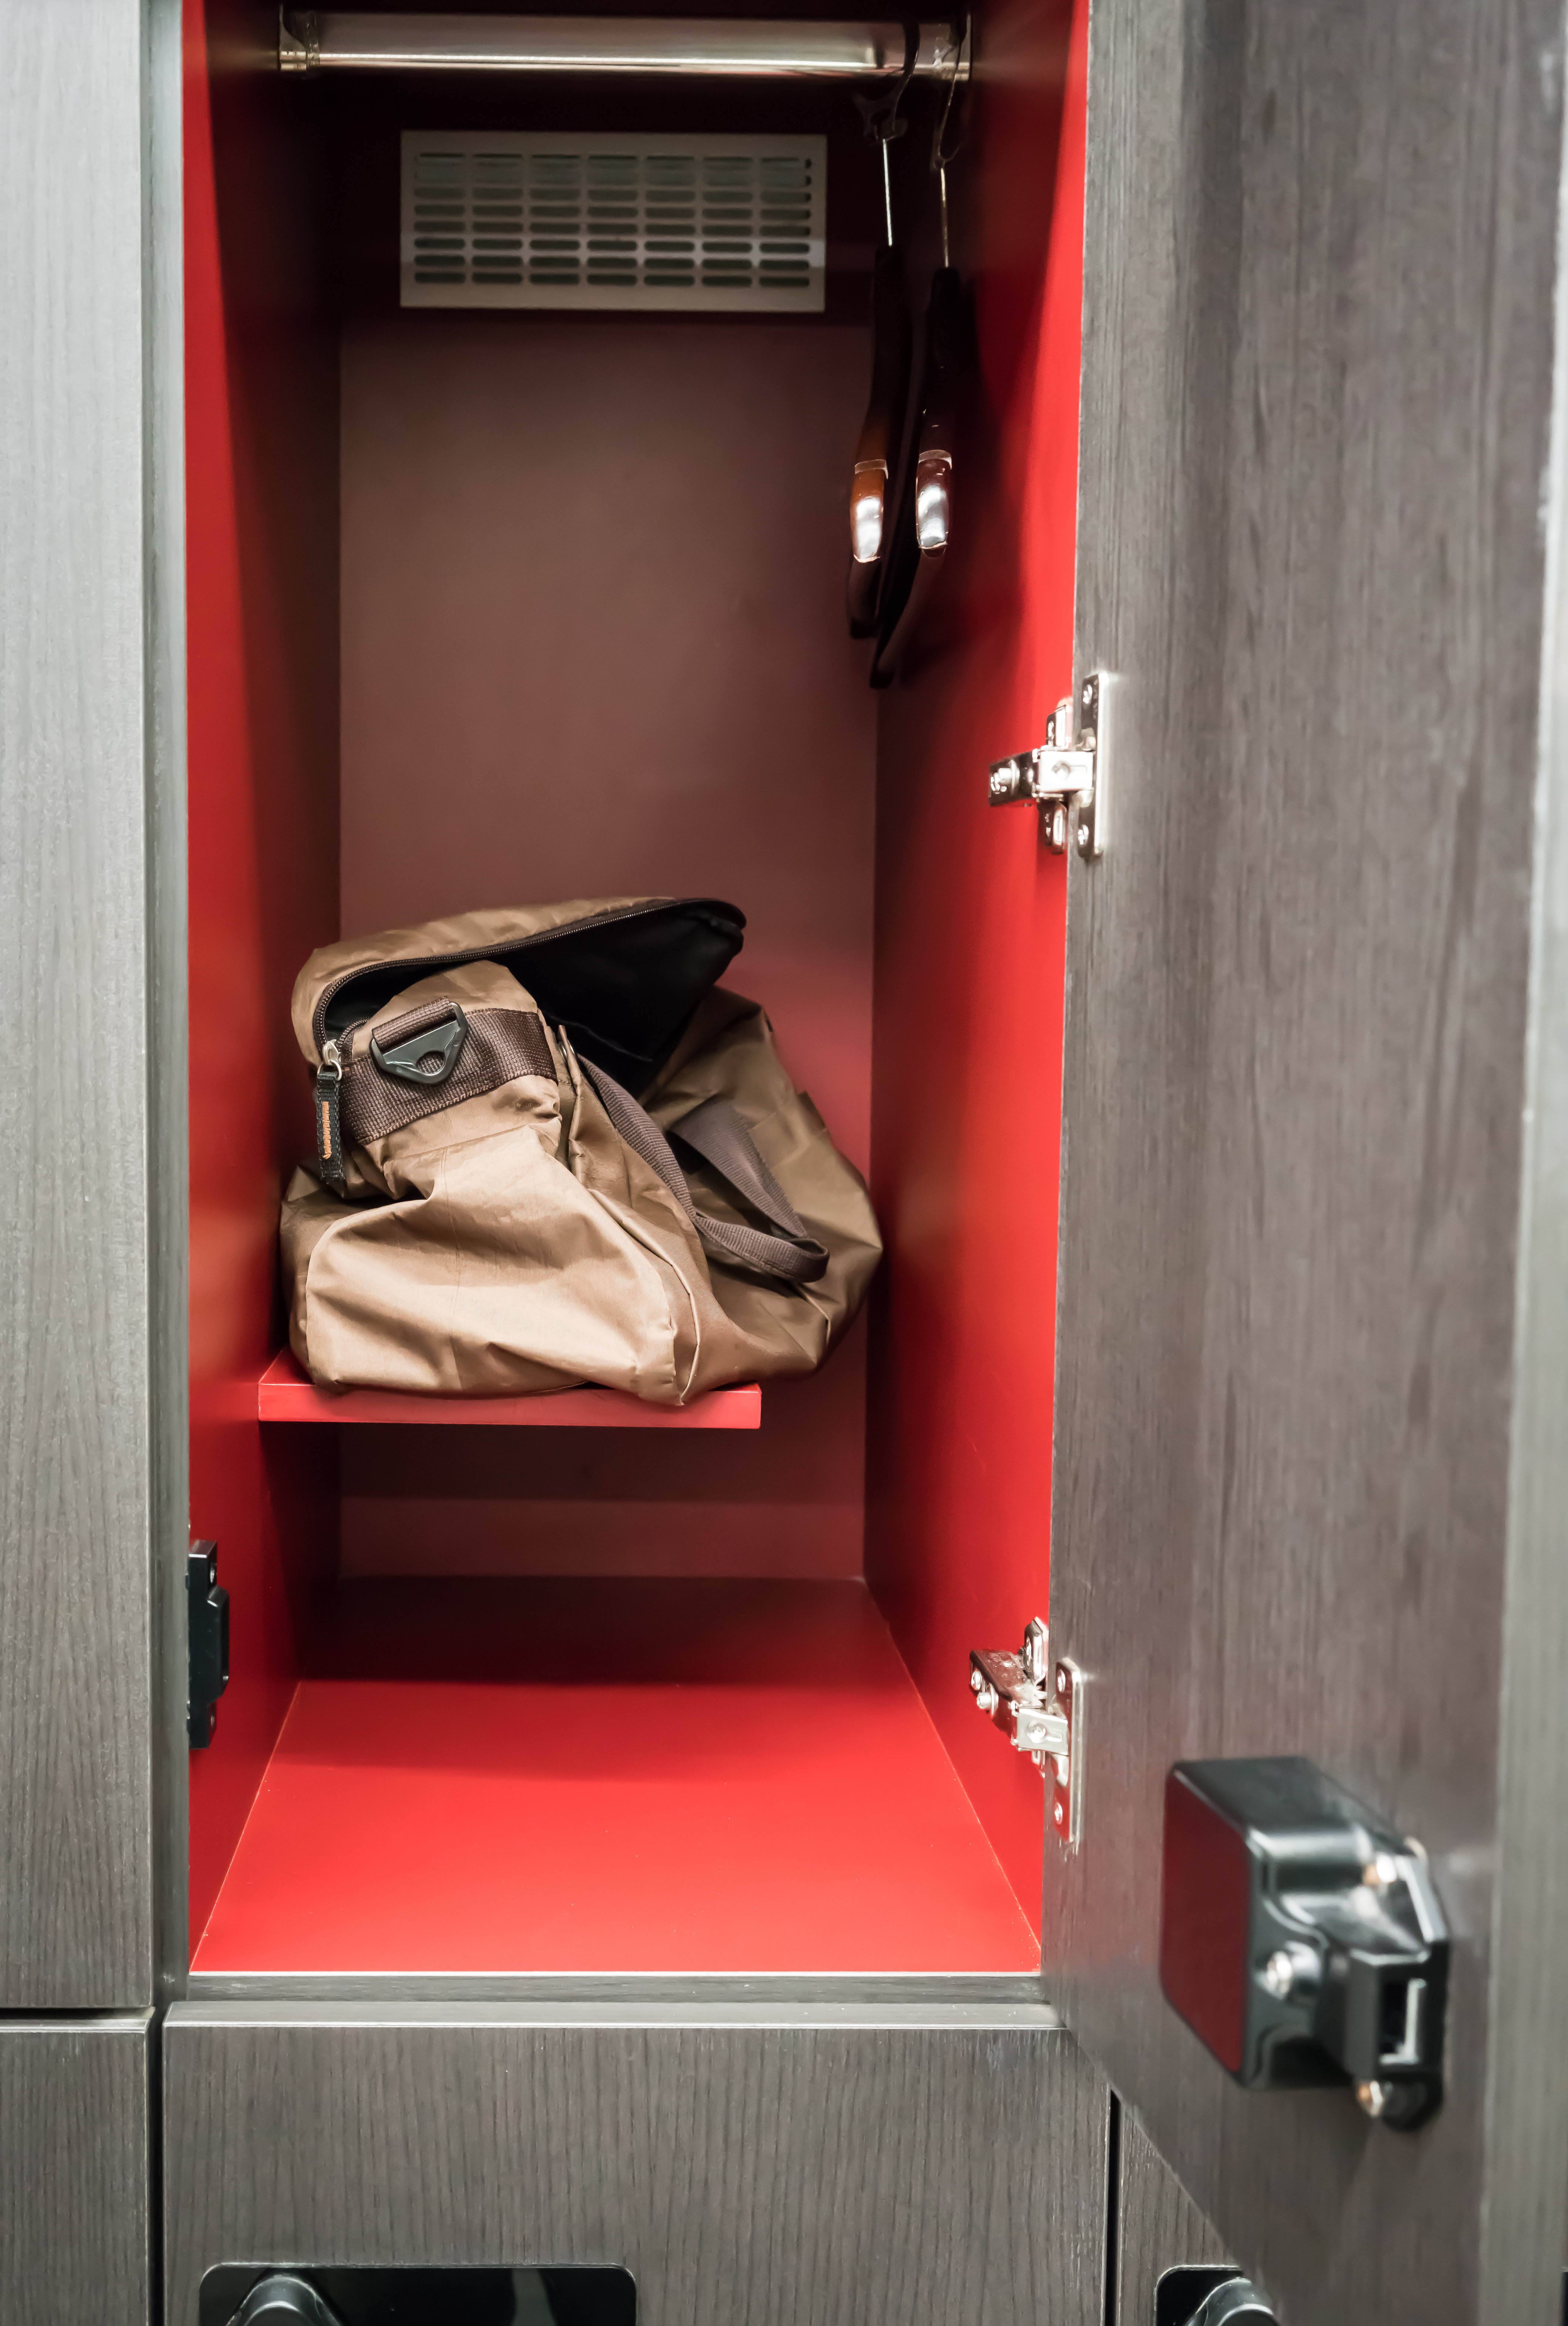 Un sac de sport dans un placard | Source : Shutterstock